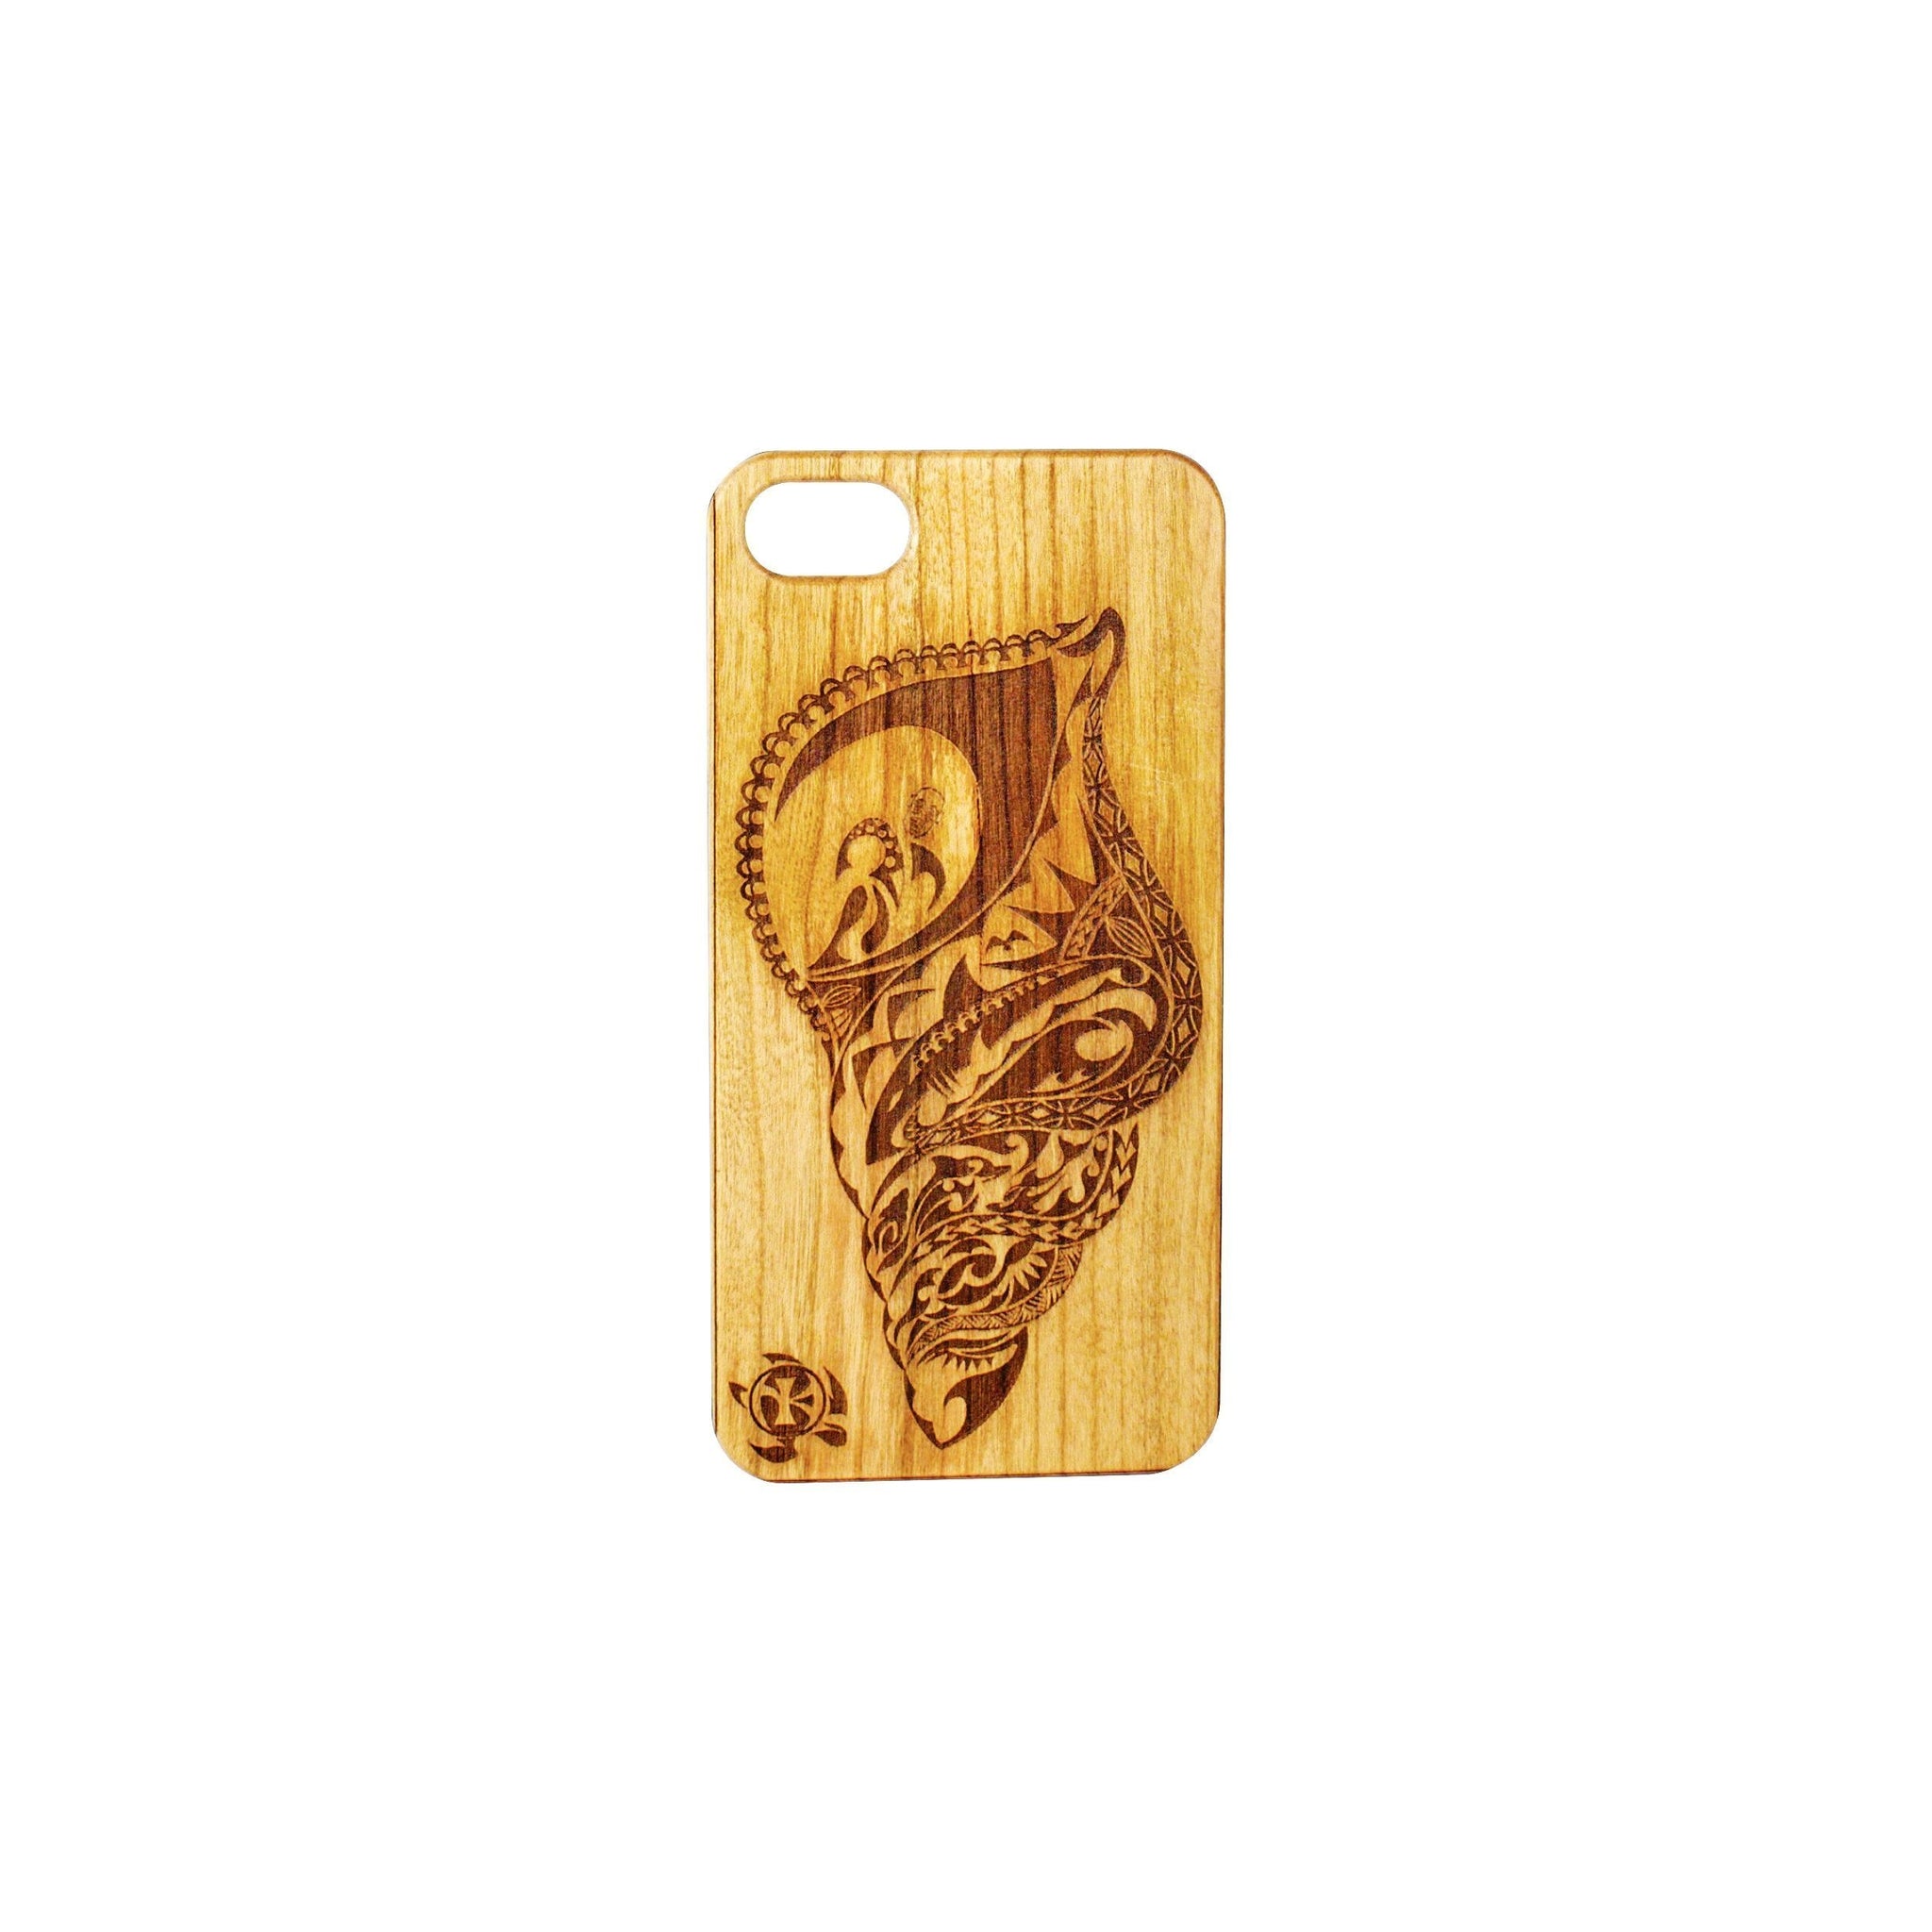 iPhone 7/8 - Wood Phone Cover - Shell of the Ocean - Toka Creates